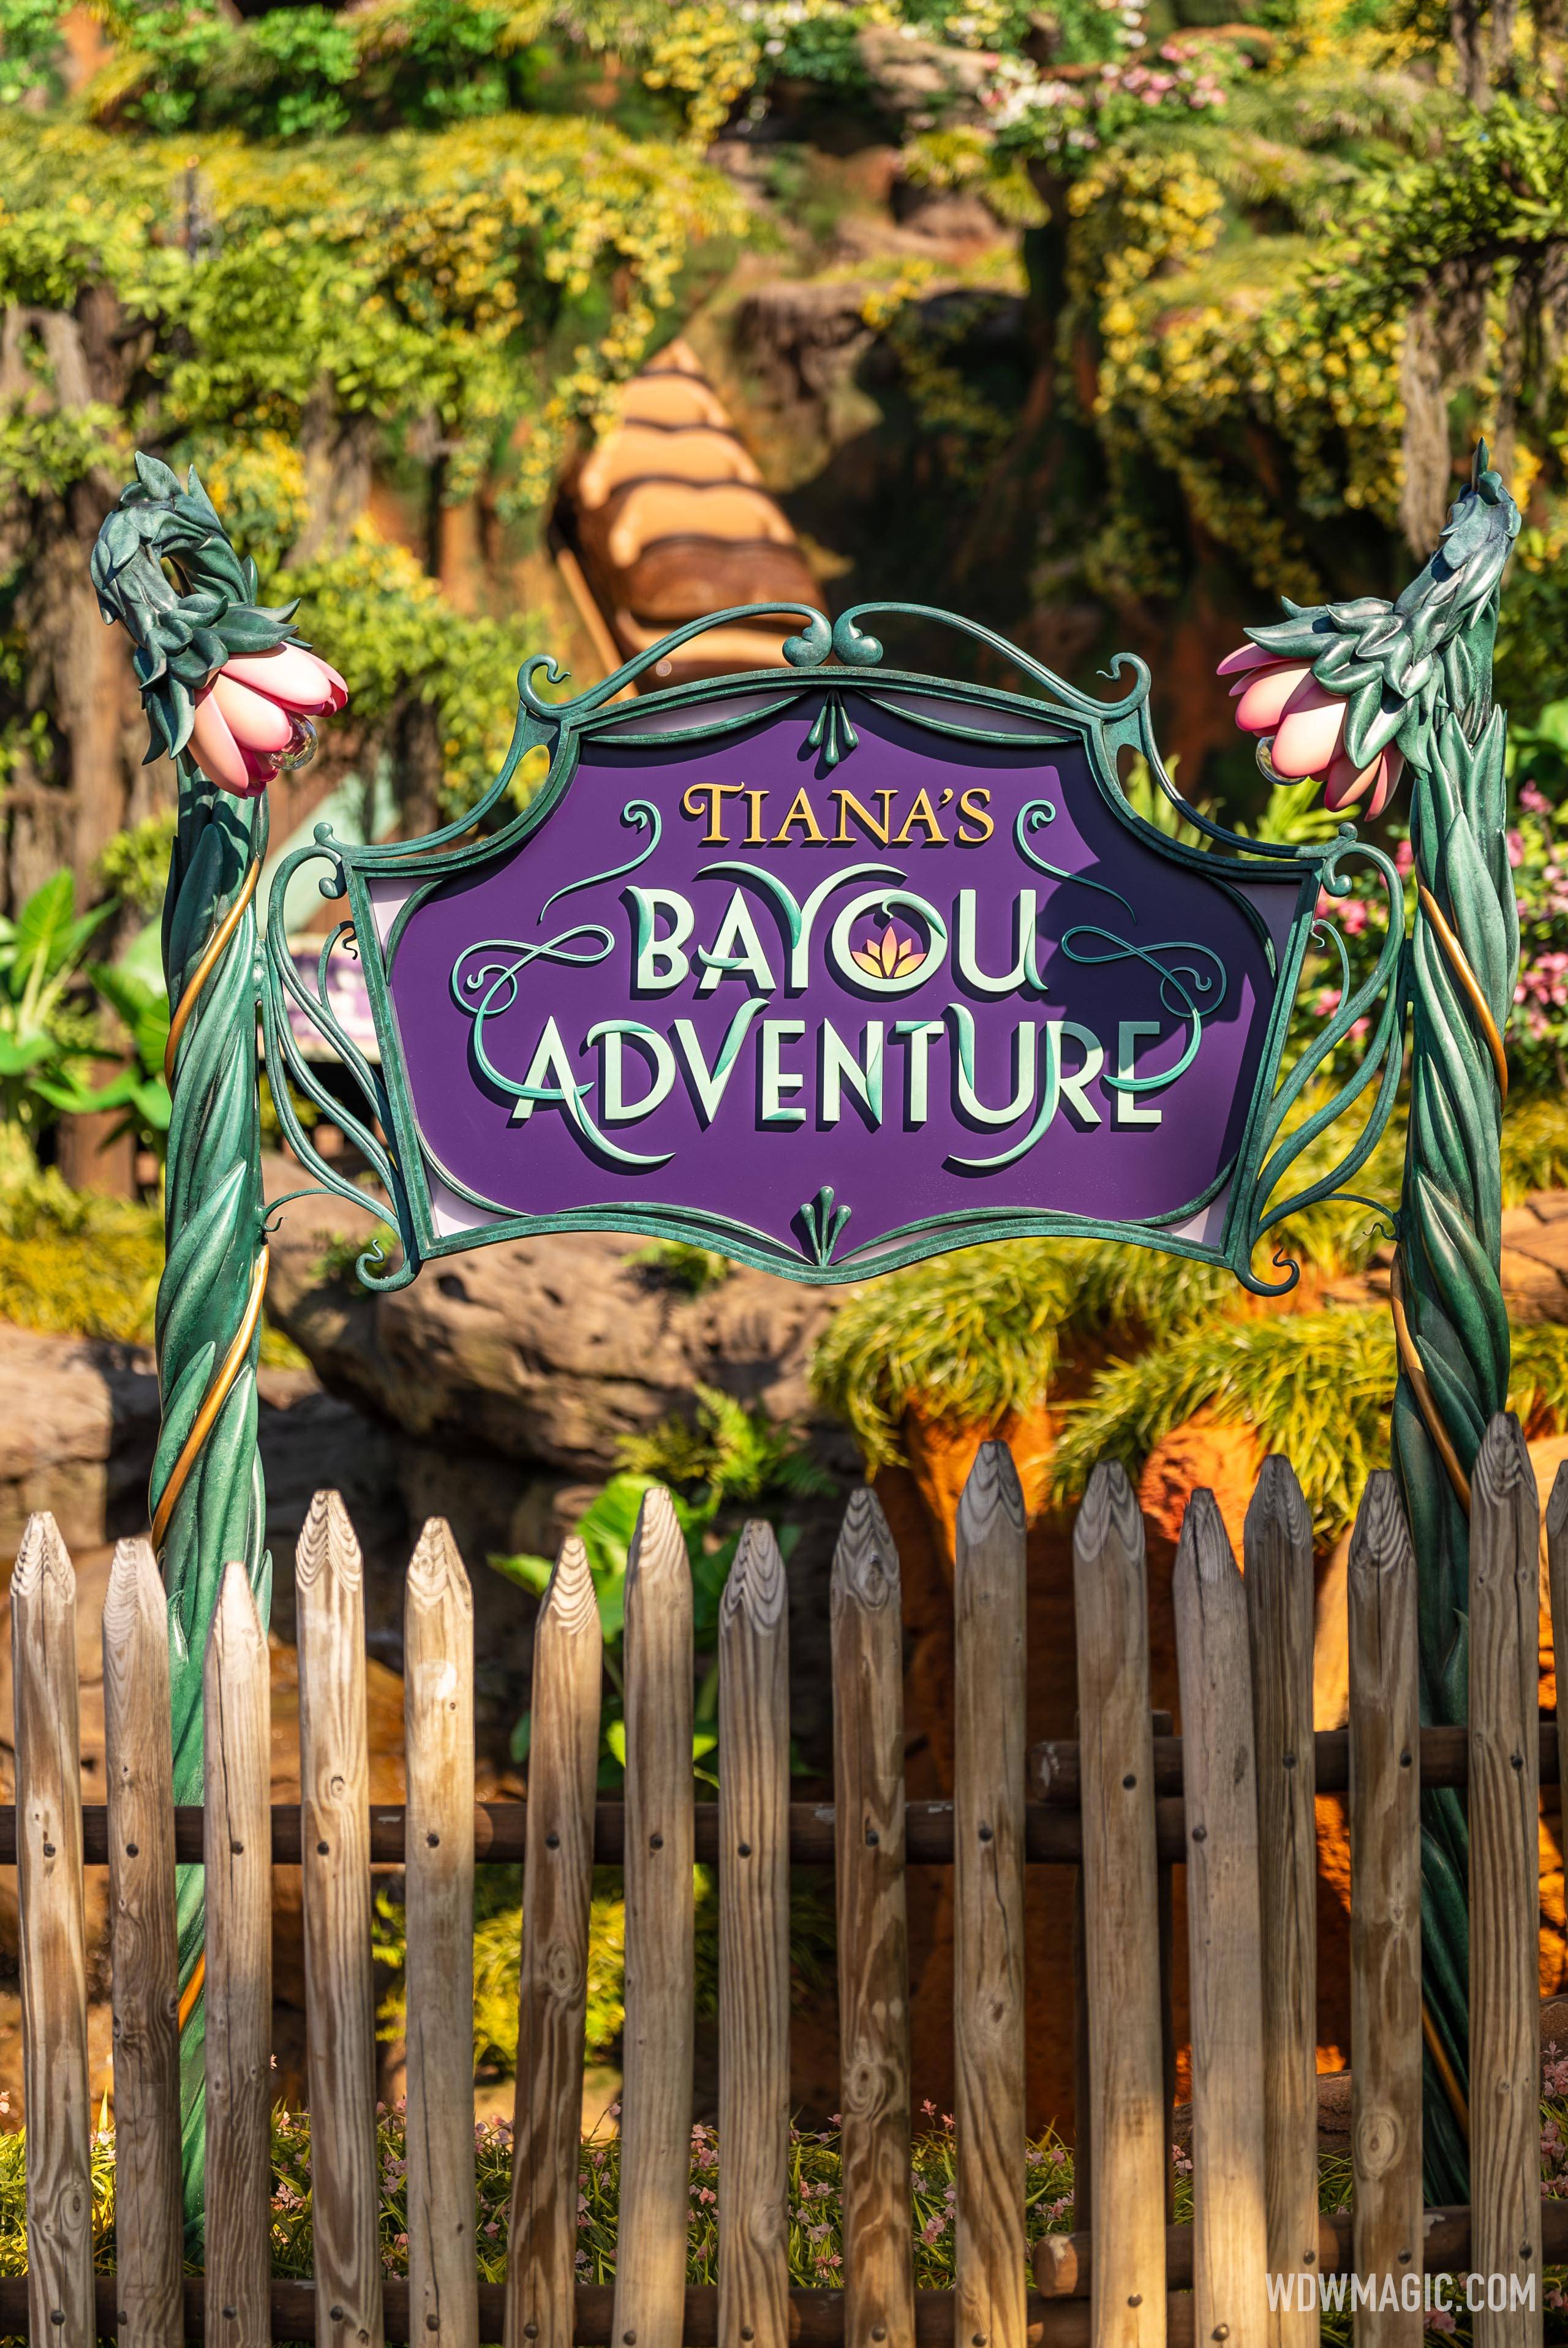 Tiana's Bayou Adventure Exterior and Queue